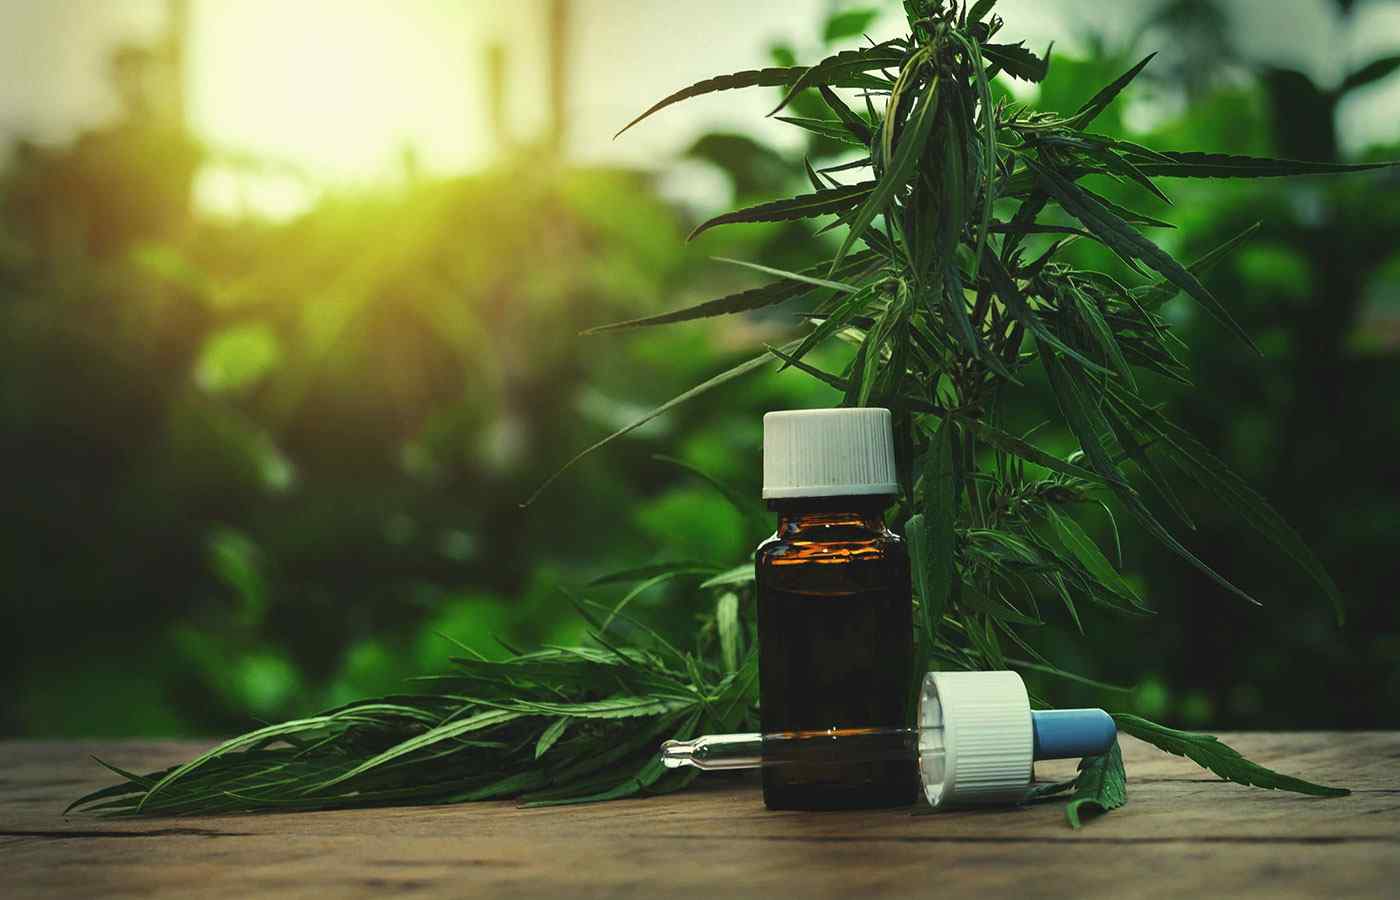 cannabidiol oil extracted from cannabis plants